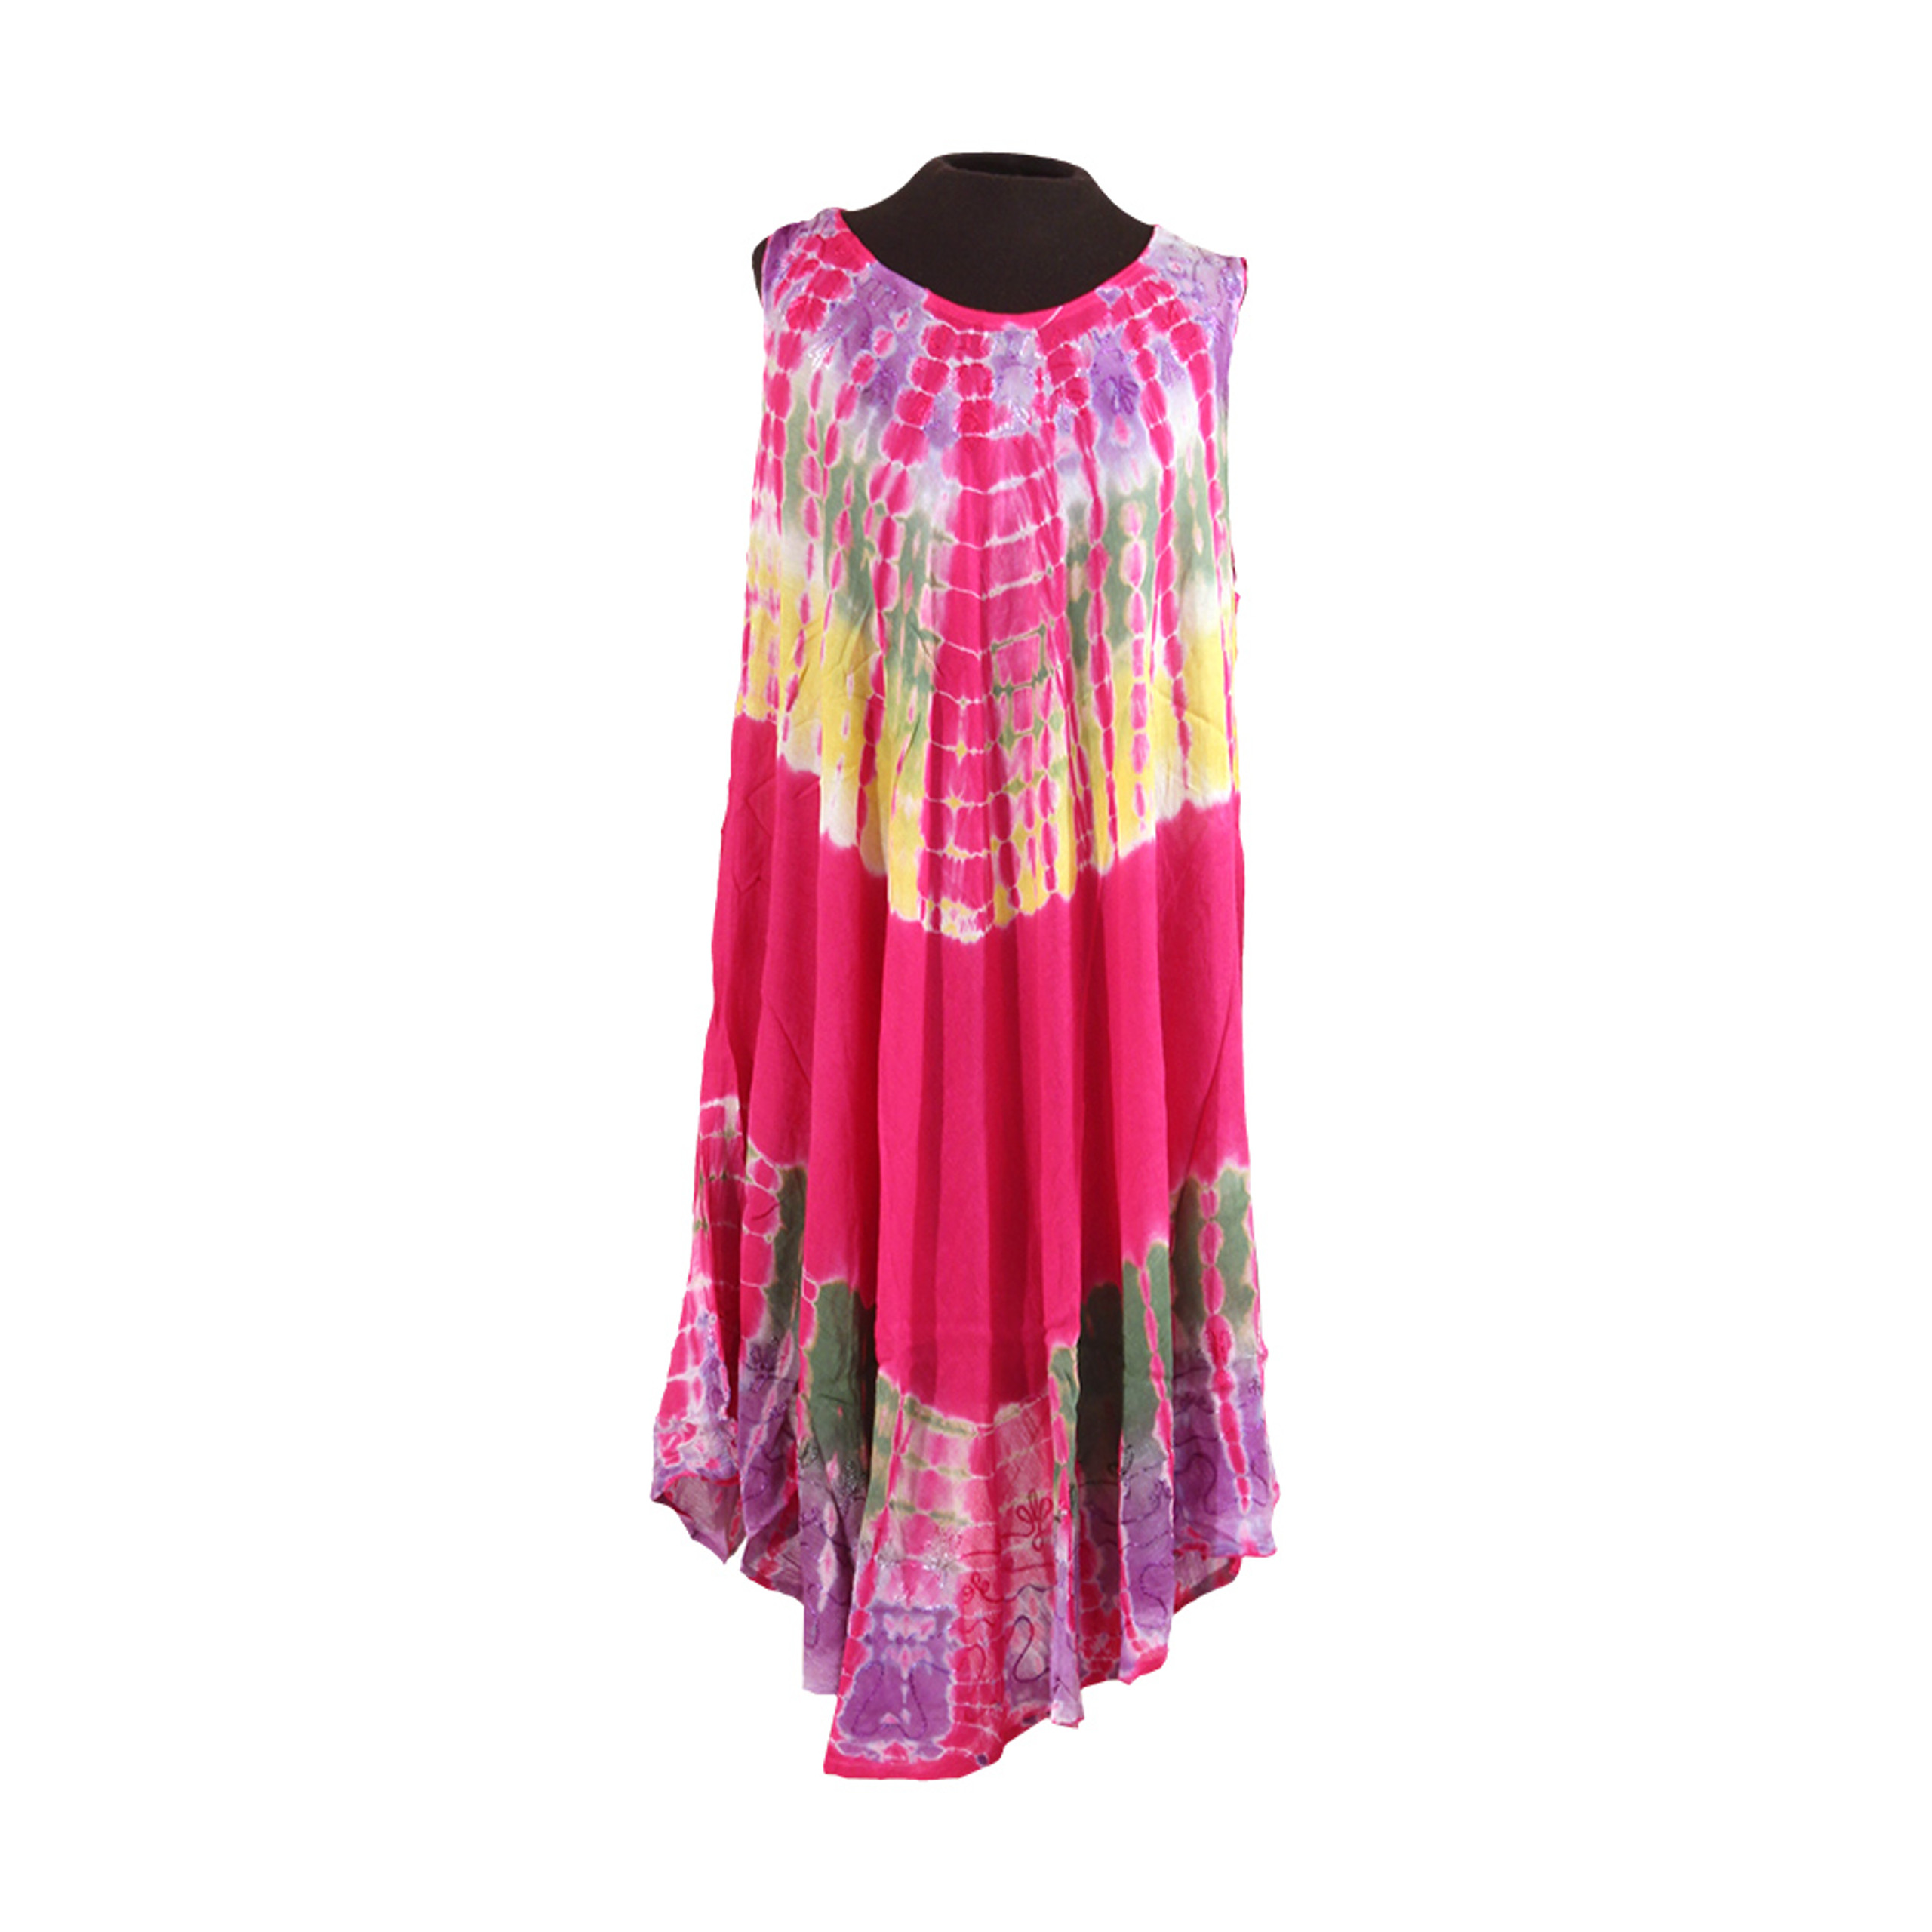 Tie-Dye Umbrella Dress - Africa Imports